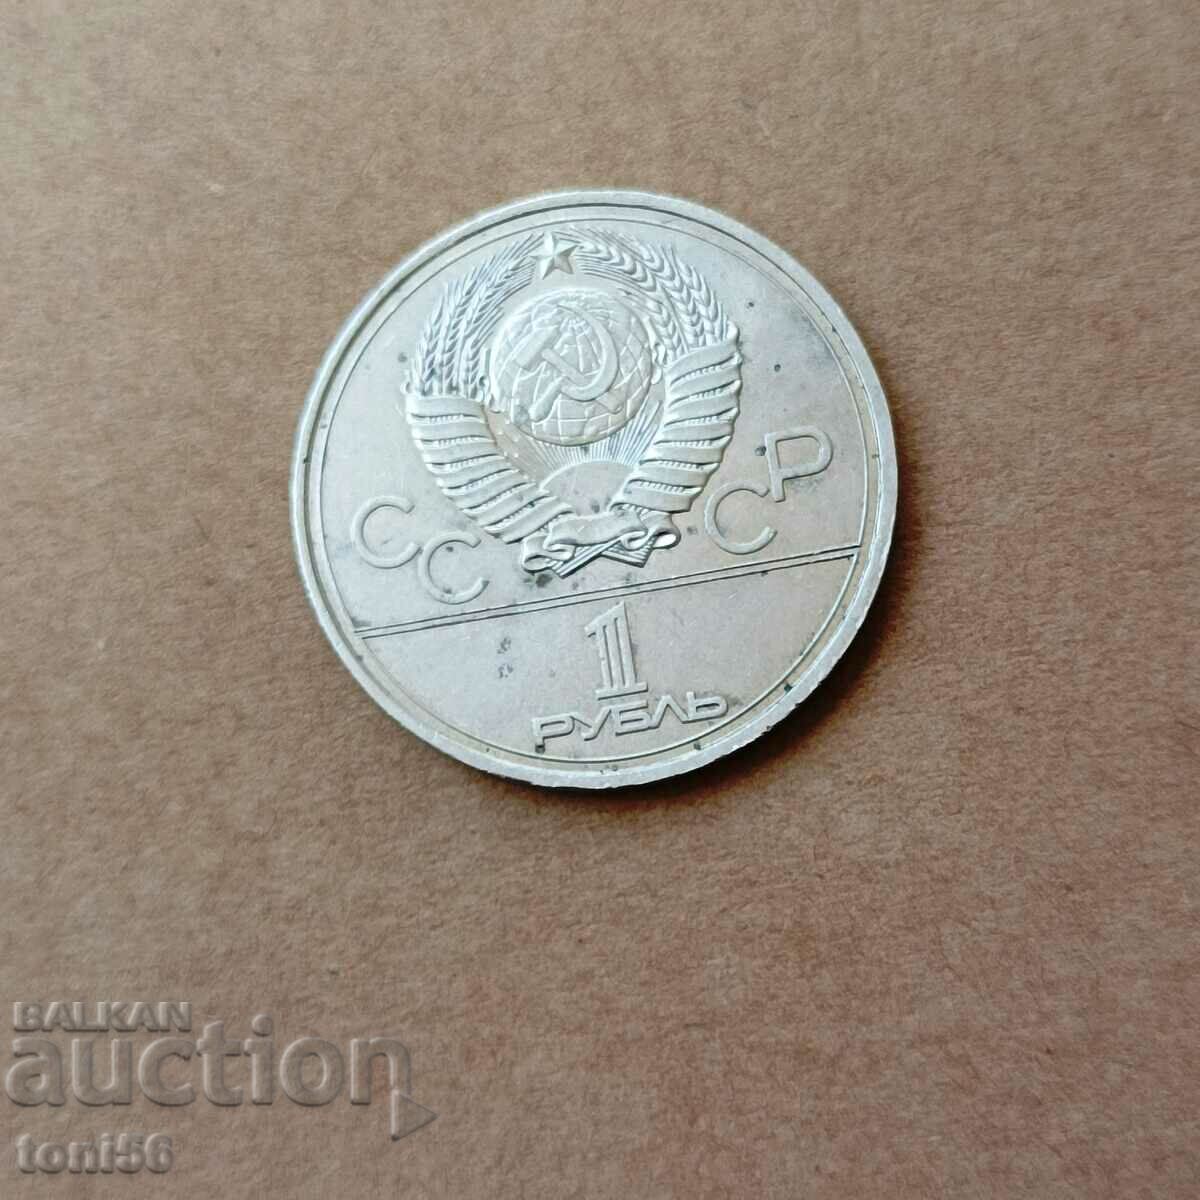 Russia 1 ruble 1977 - Olympics